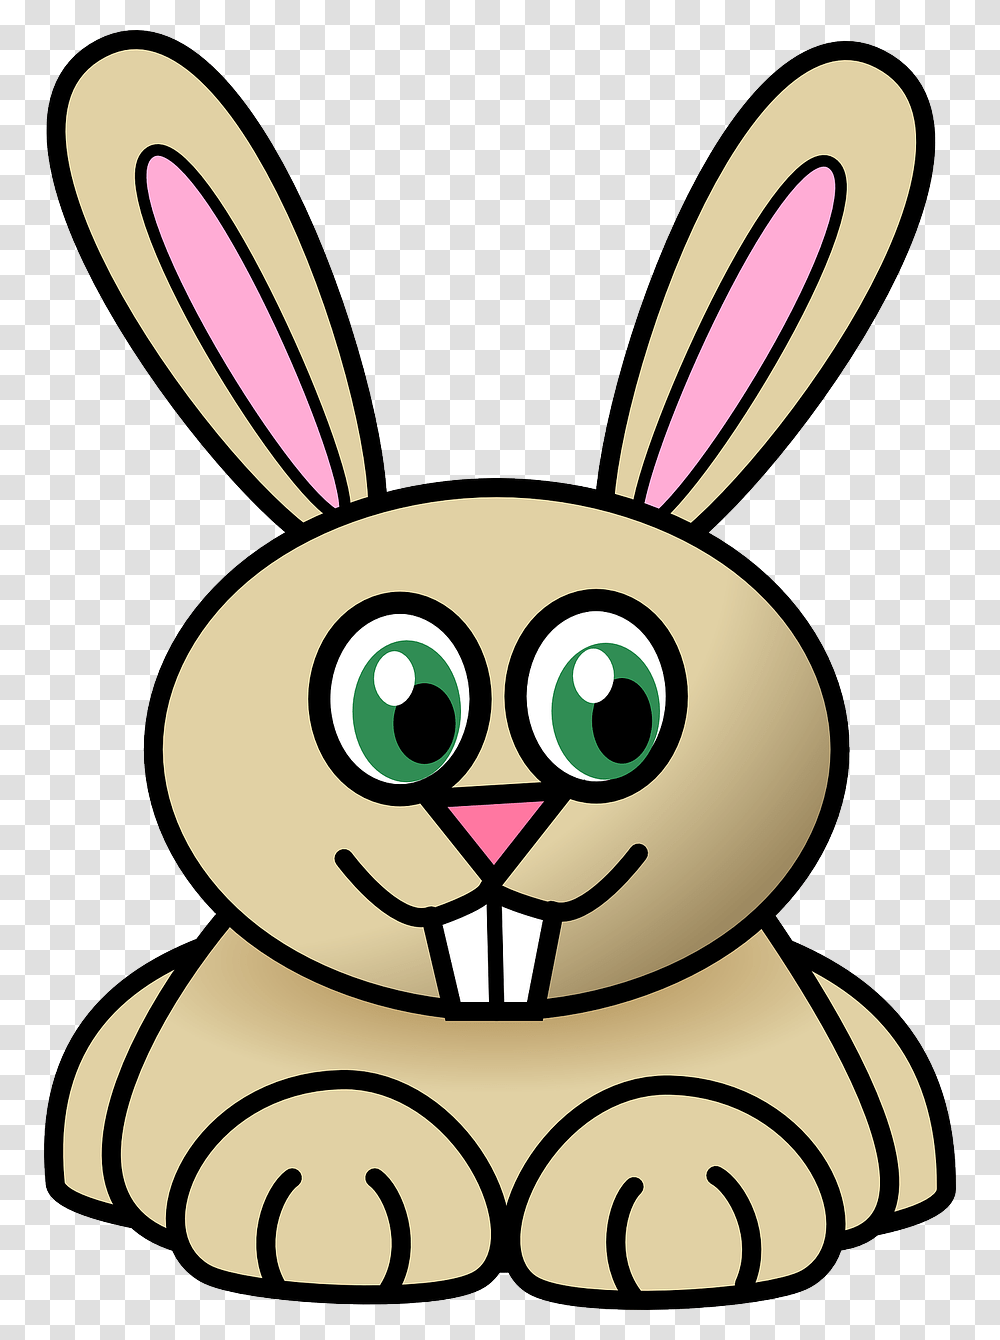 Thumb Image Rabbit Clip Art, Lawn Mower, Tool, Sweets, Food Transparent Png